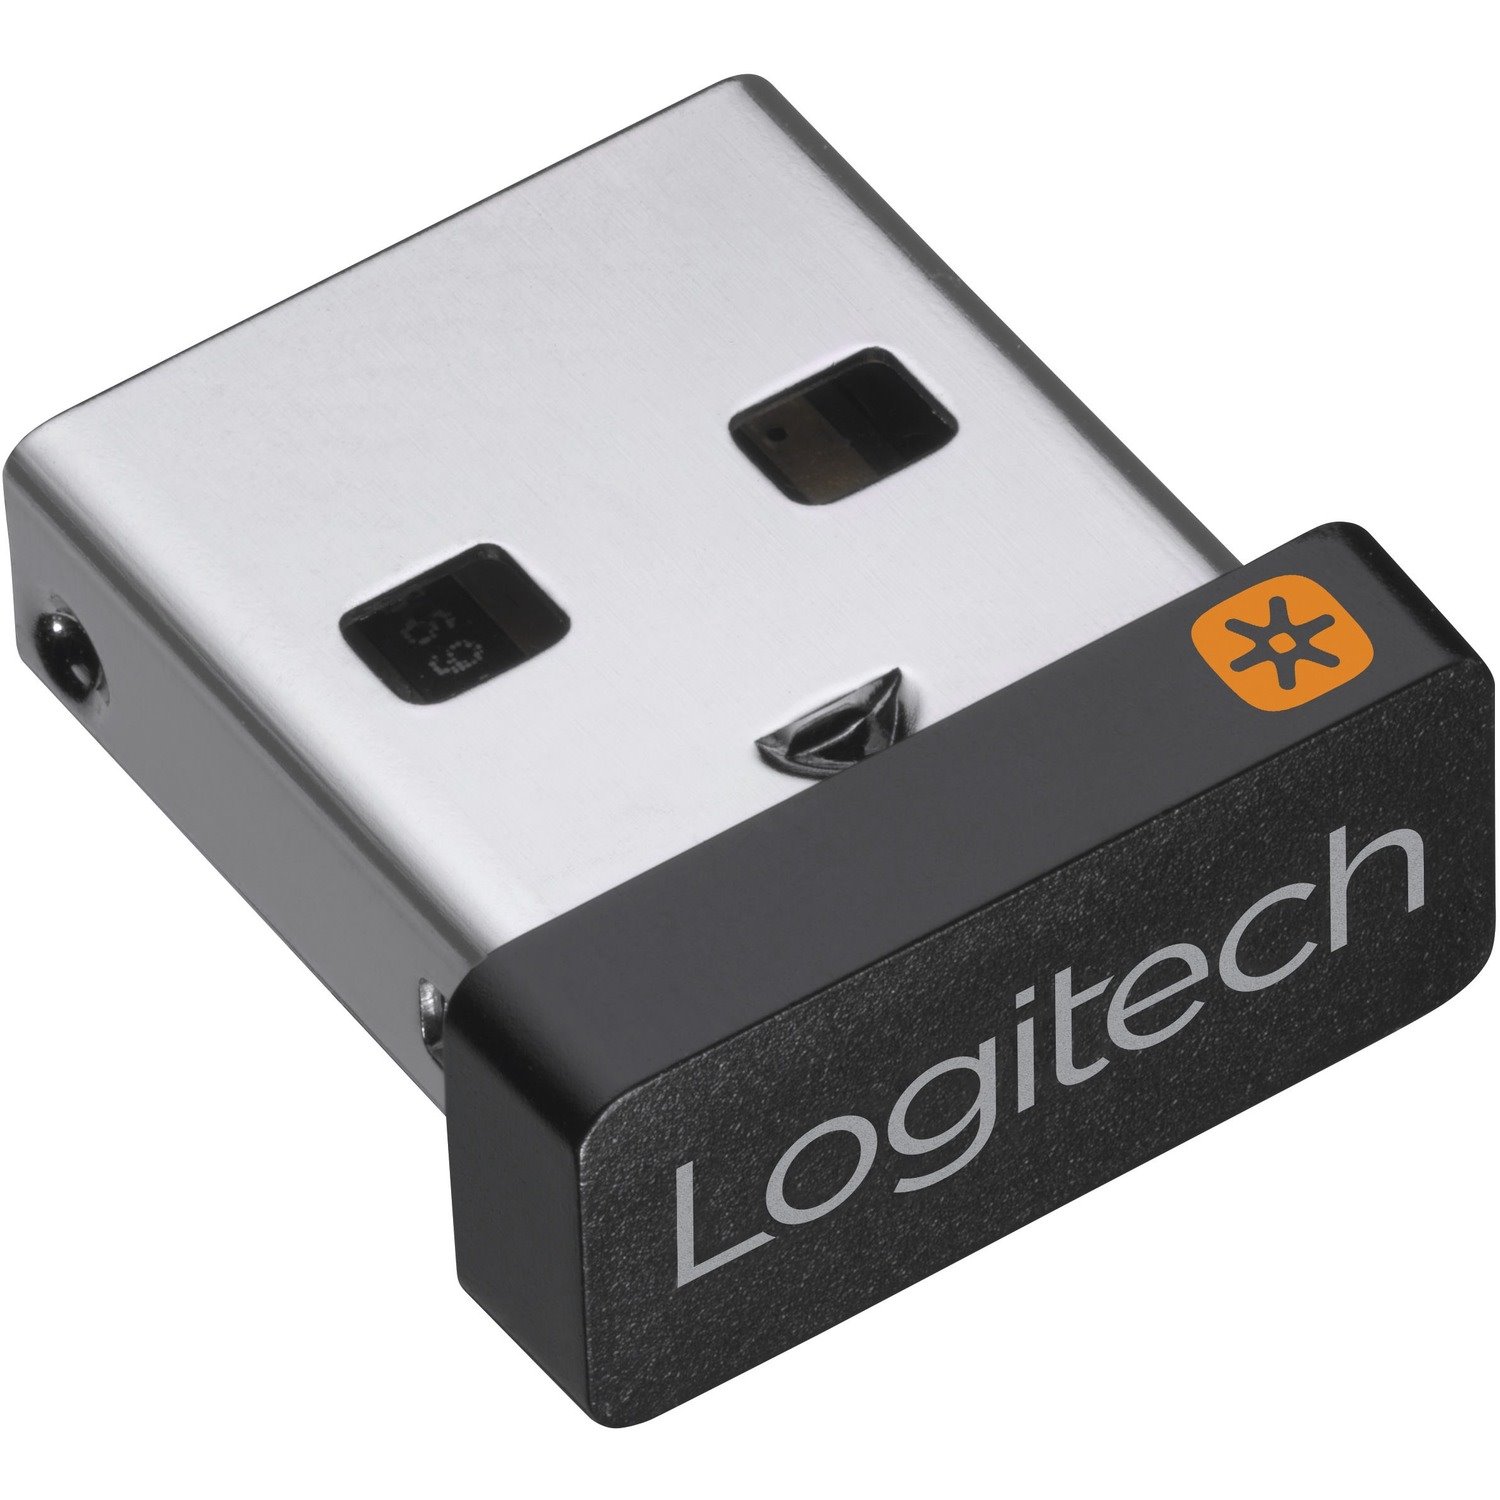 Logitech USB unifying receiver for Desktop Computer/Notebook